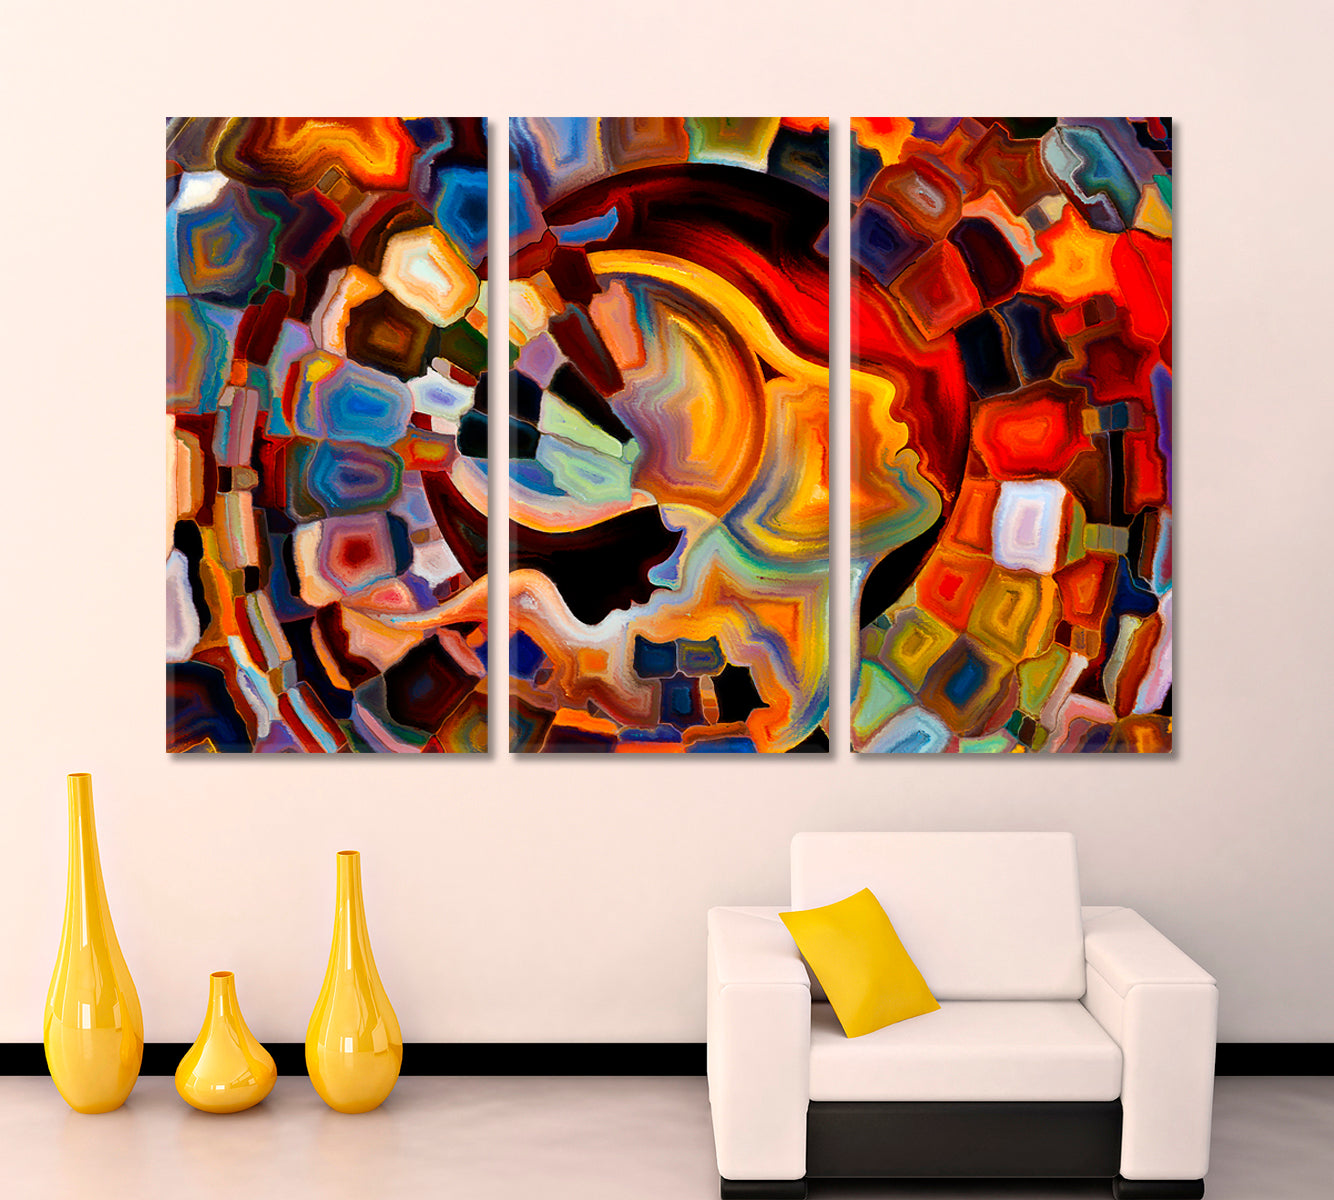 MOSAIC PATTERNS  Artistic Abstraction Human Mind Consciousness Art Artesty 3 panels 36" x 24" 